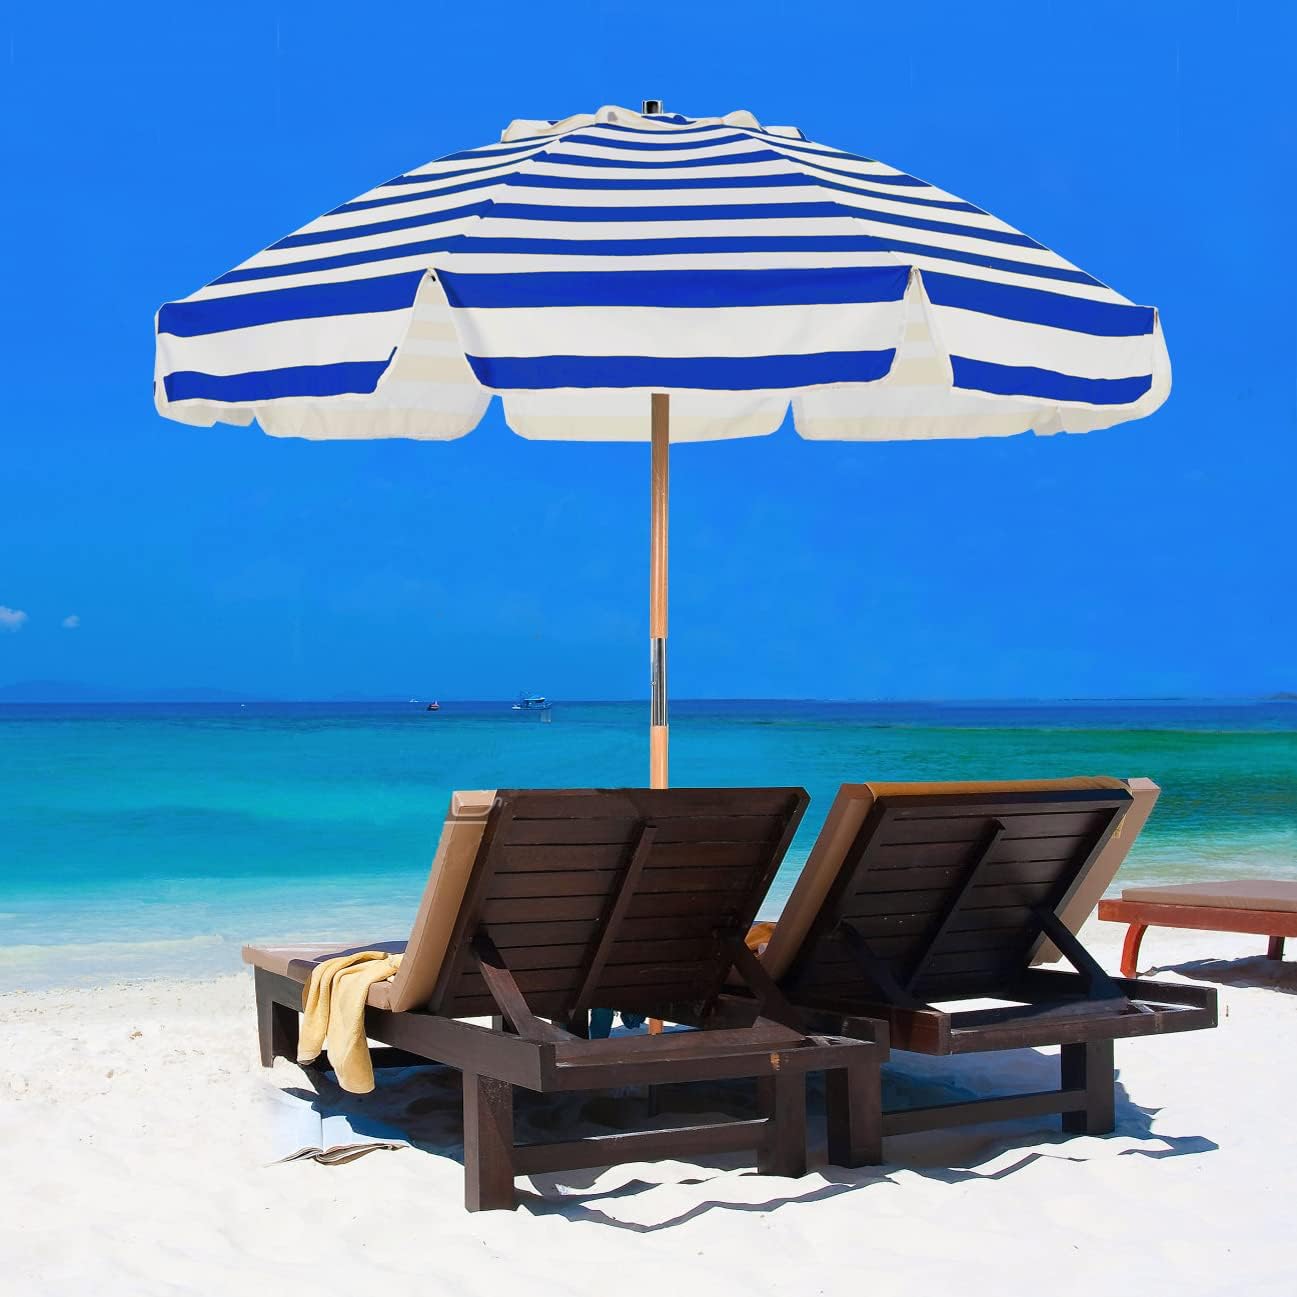 AMMSUN 7.5ft Commercial Grade  Beach Umbrella Blue Strips